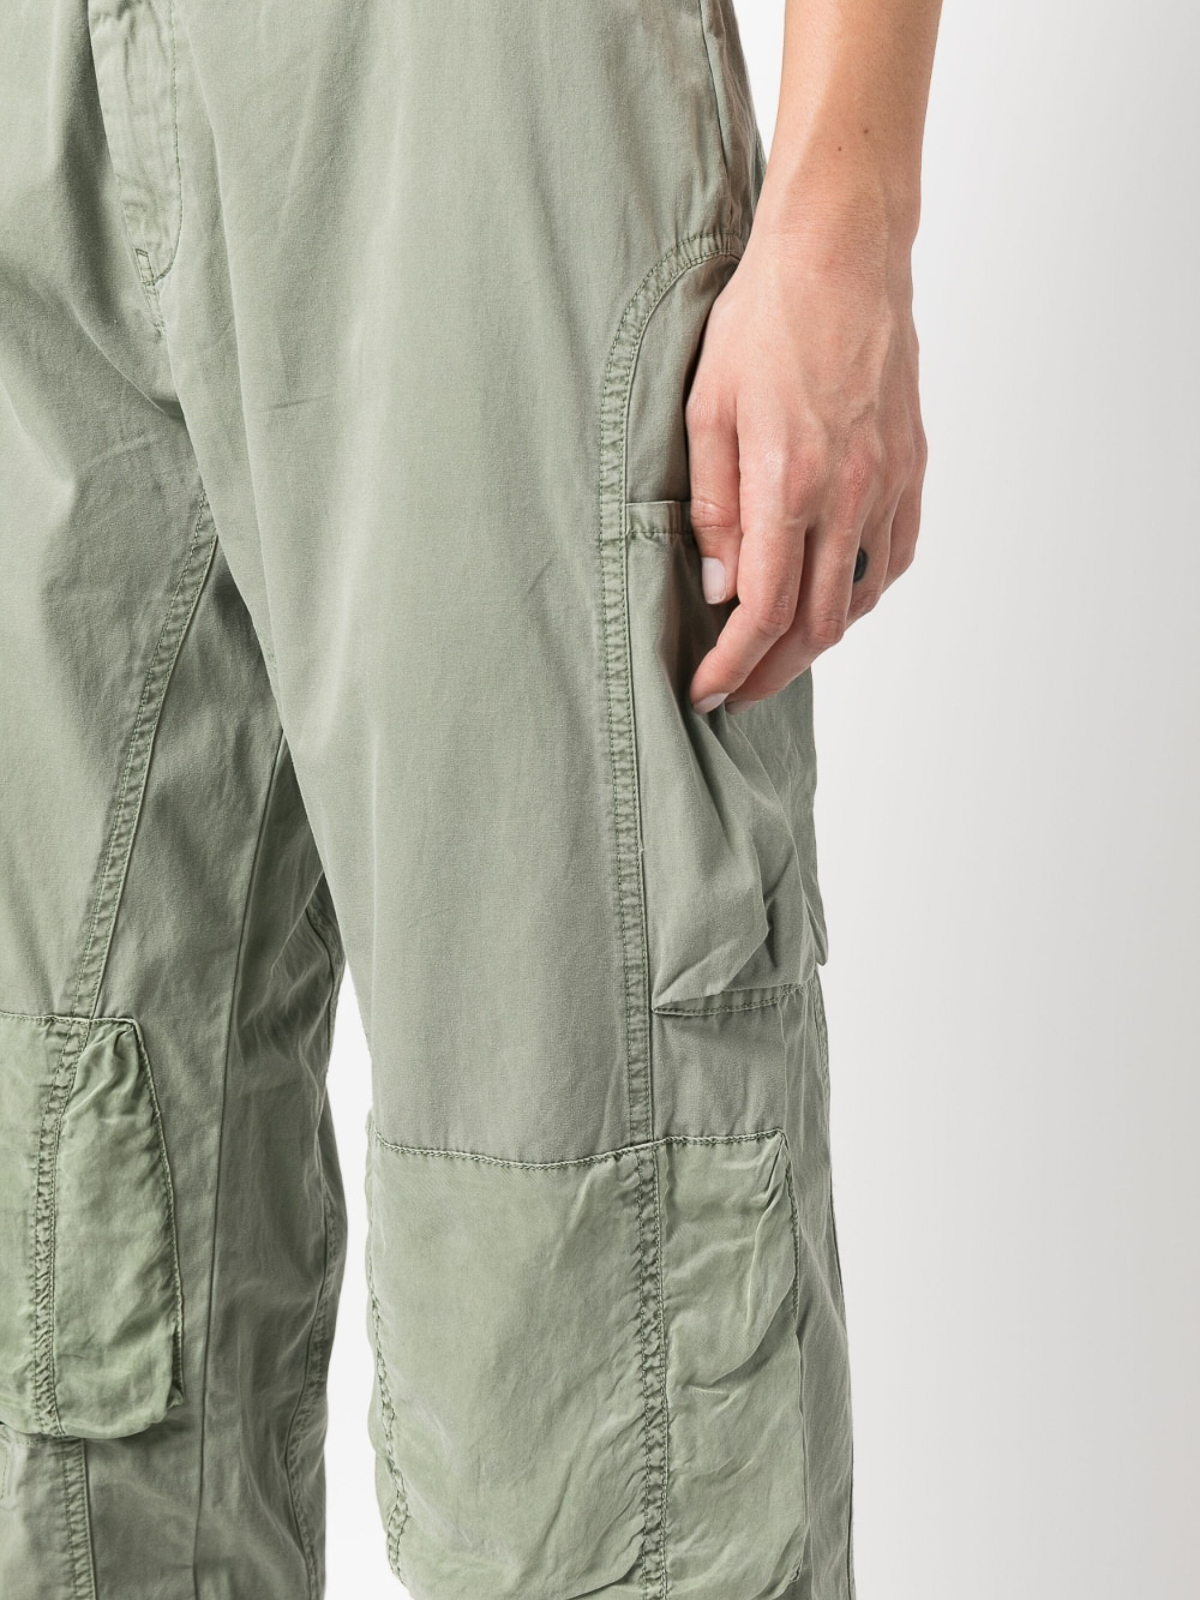 Feerol Men's Cotton Cargo Trousers -Black, (32W X 32L) : Amazon.in:  Clothing & Accessories